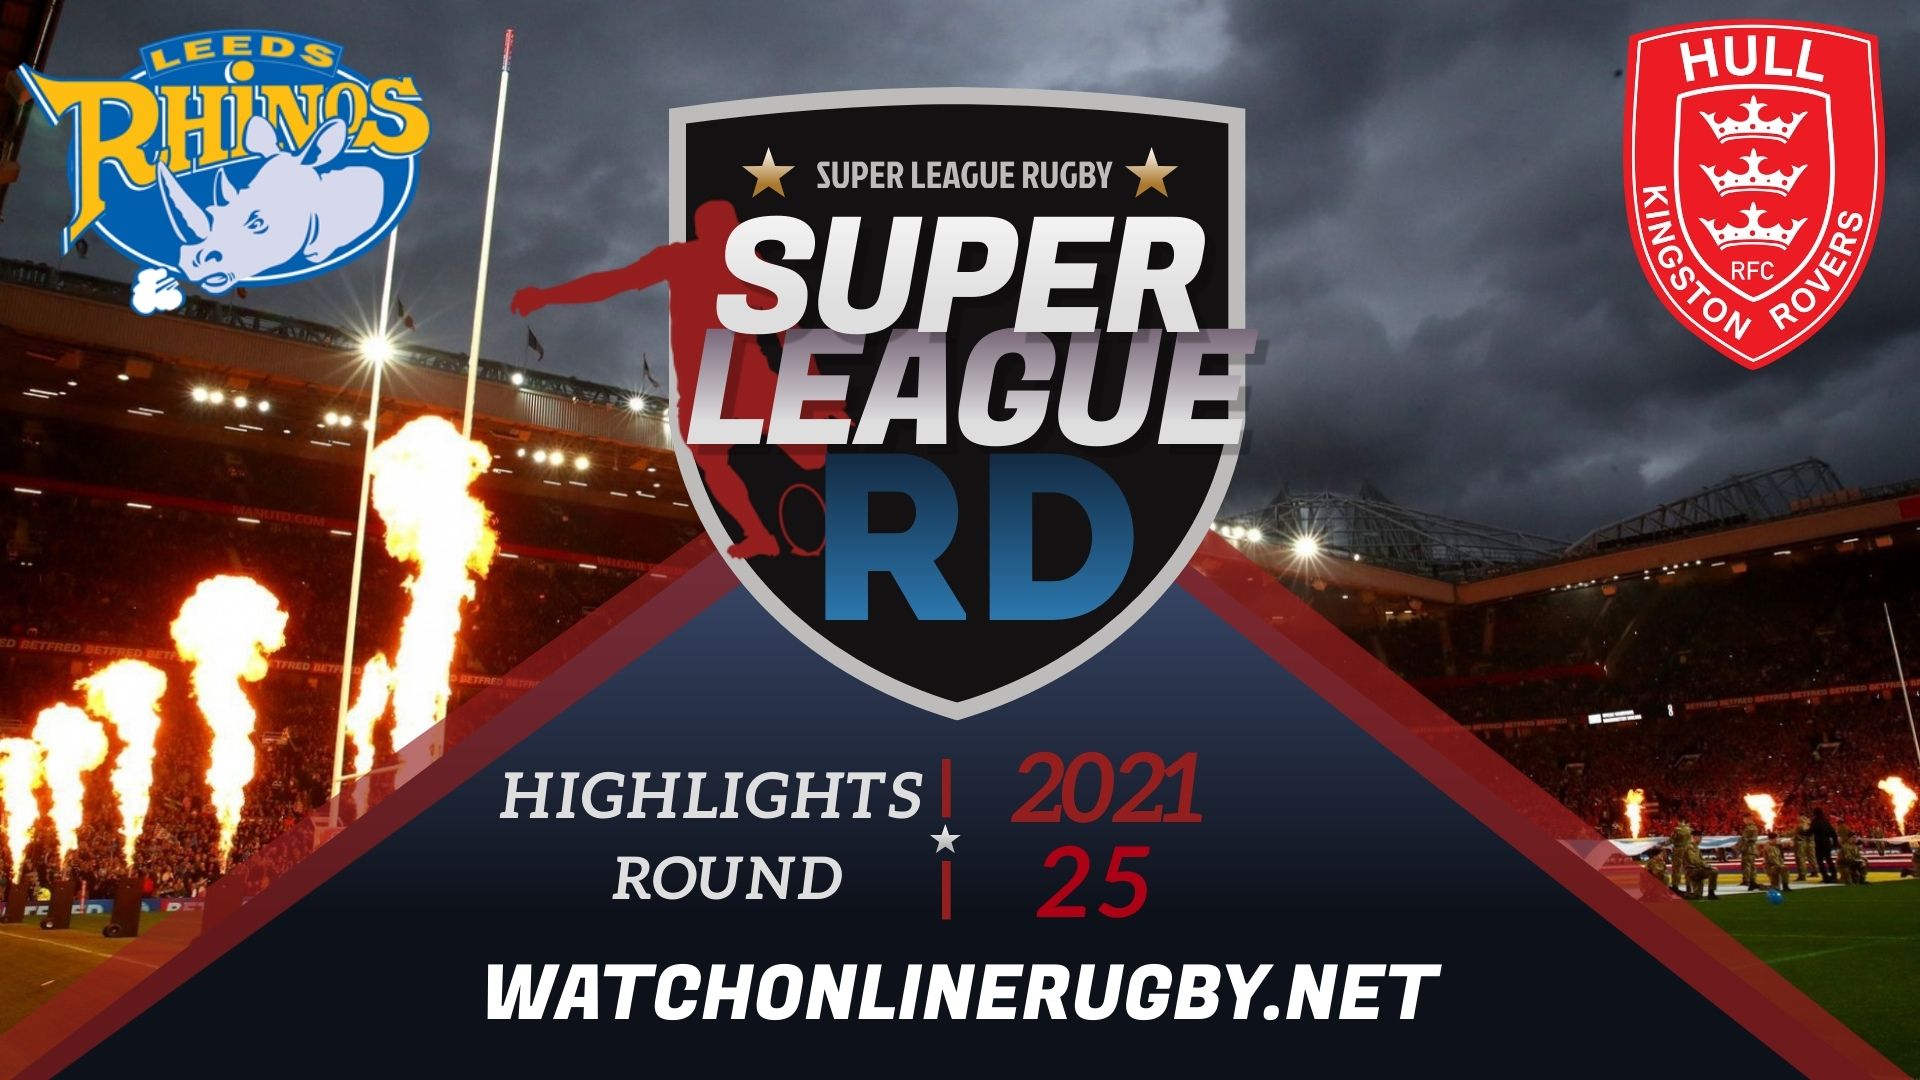 Leeds Rhinos Vs Hull KR Super League Rugby 2021 RD 25